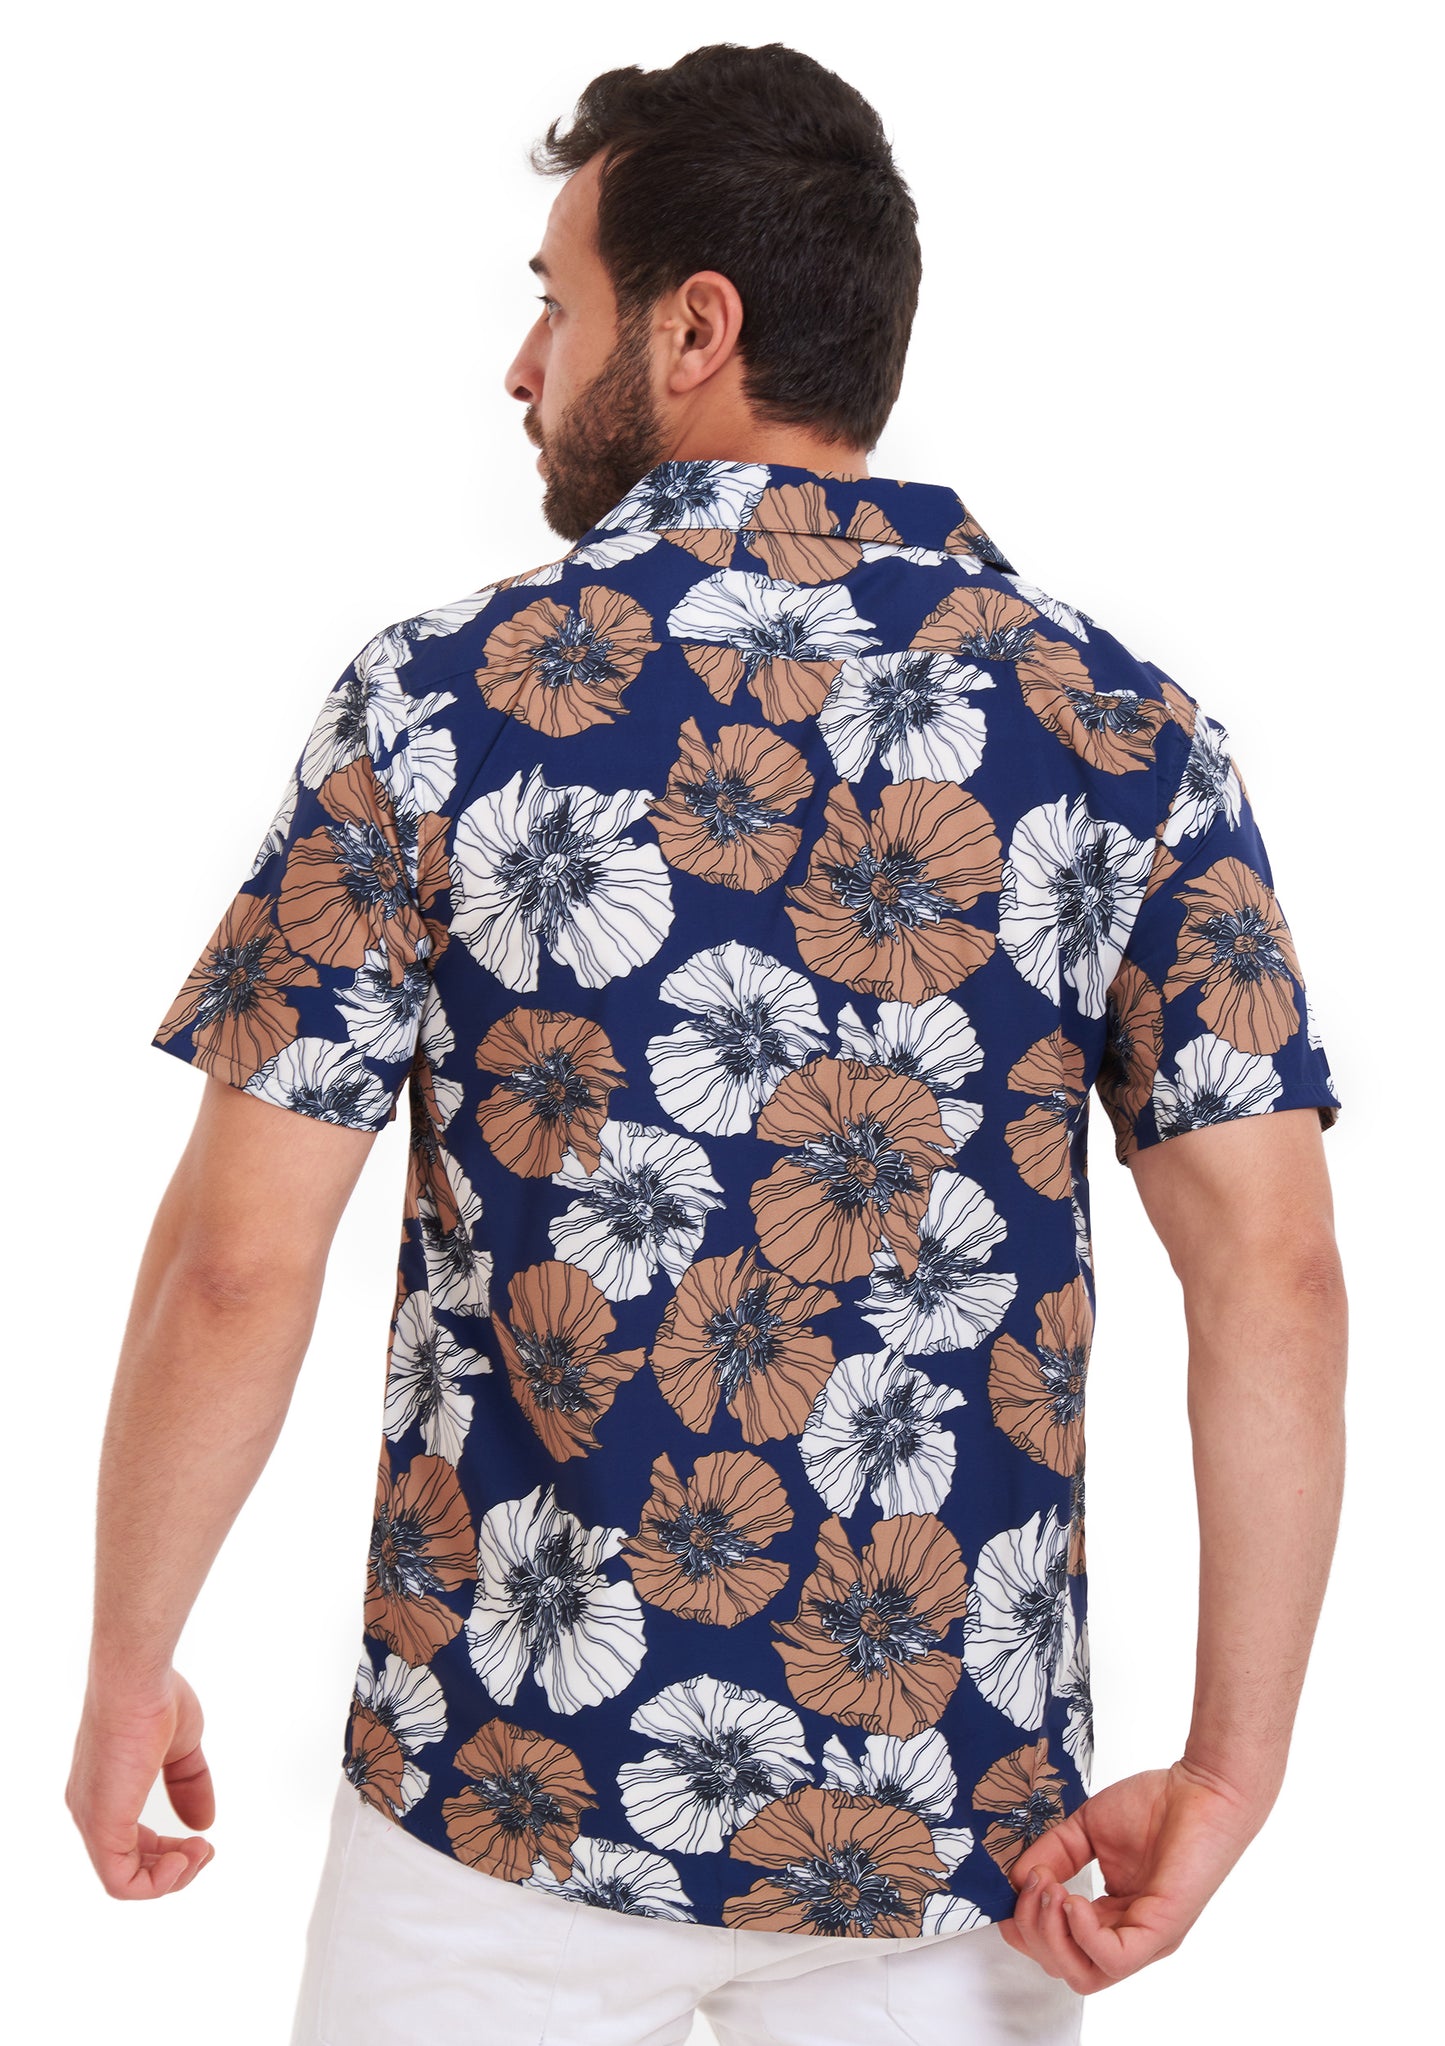 D.Blue Floral Printed Shirt